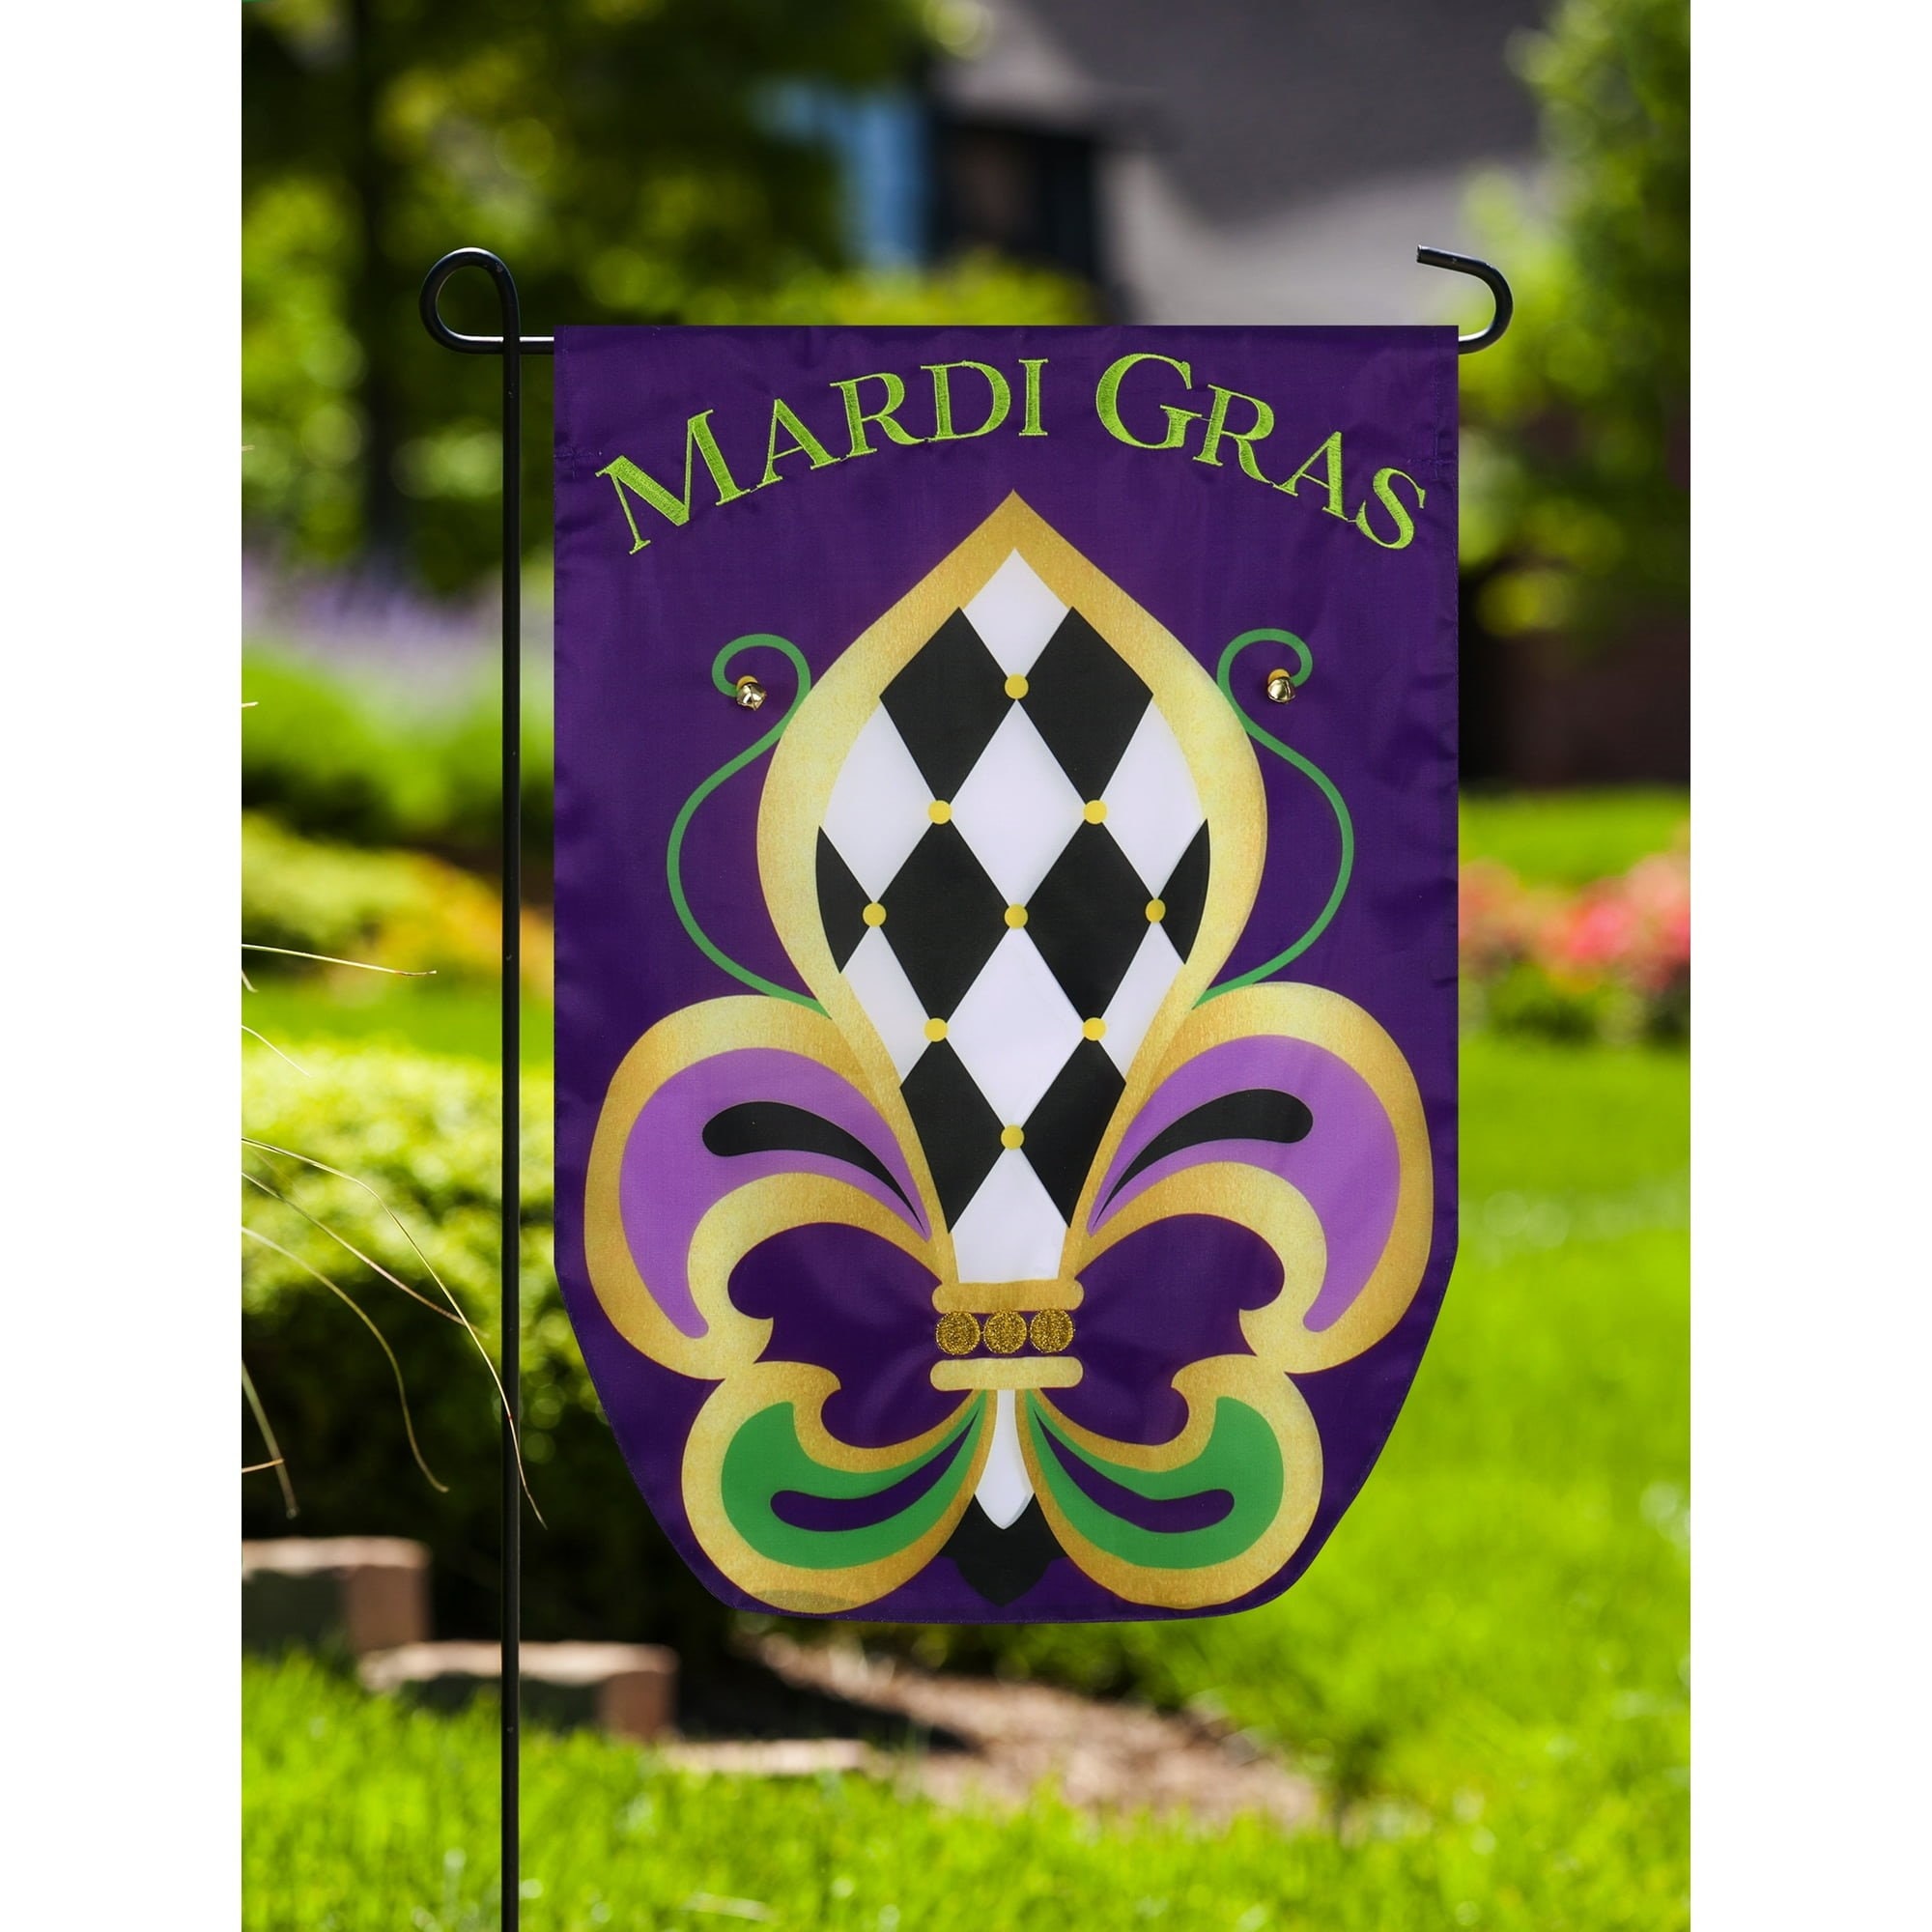 Mardi Gras, Ornament, Fleur de lis, Jester, Parade, Nola, Christmas tree,  Louisiana, Harlequin, Wholesale Available,Drez, Made in USA